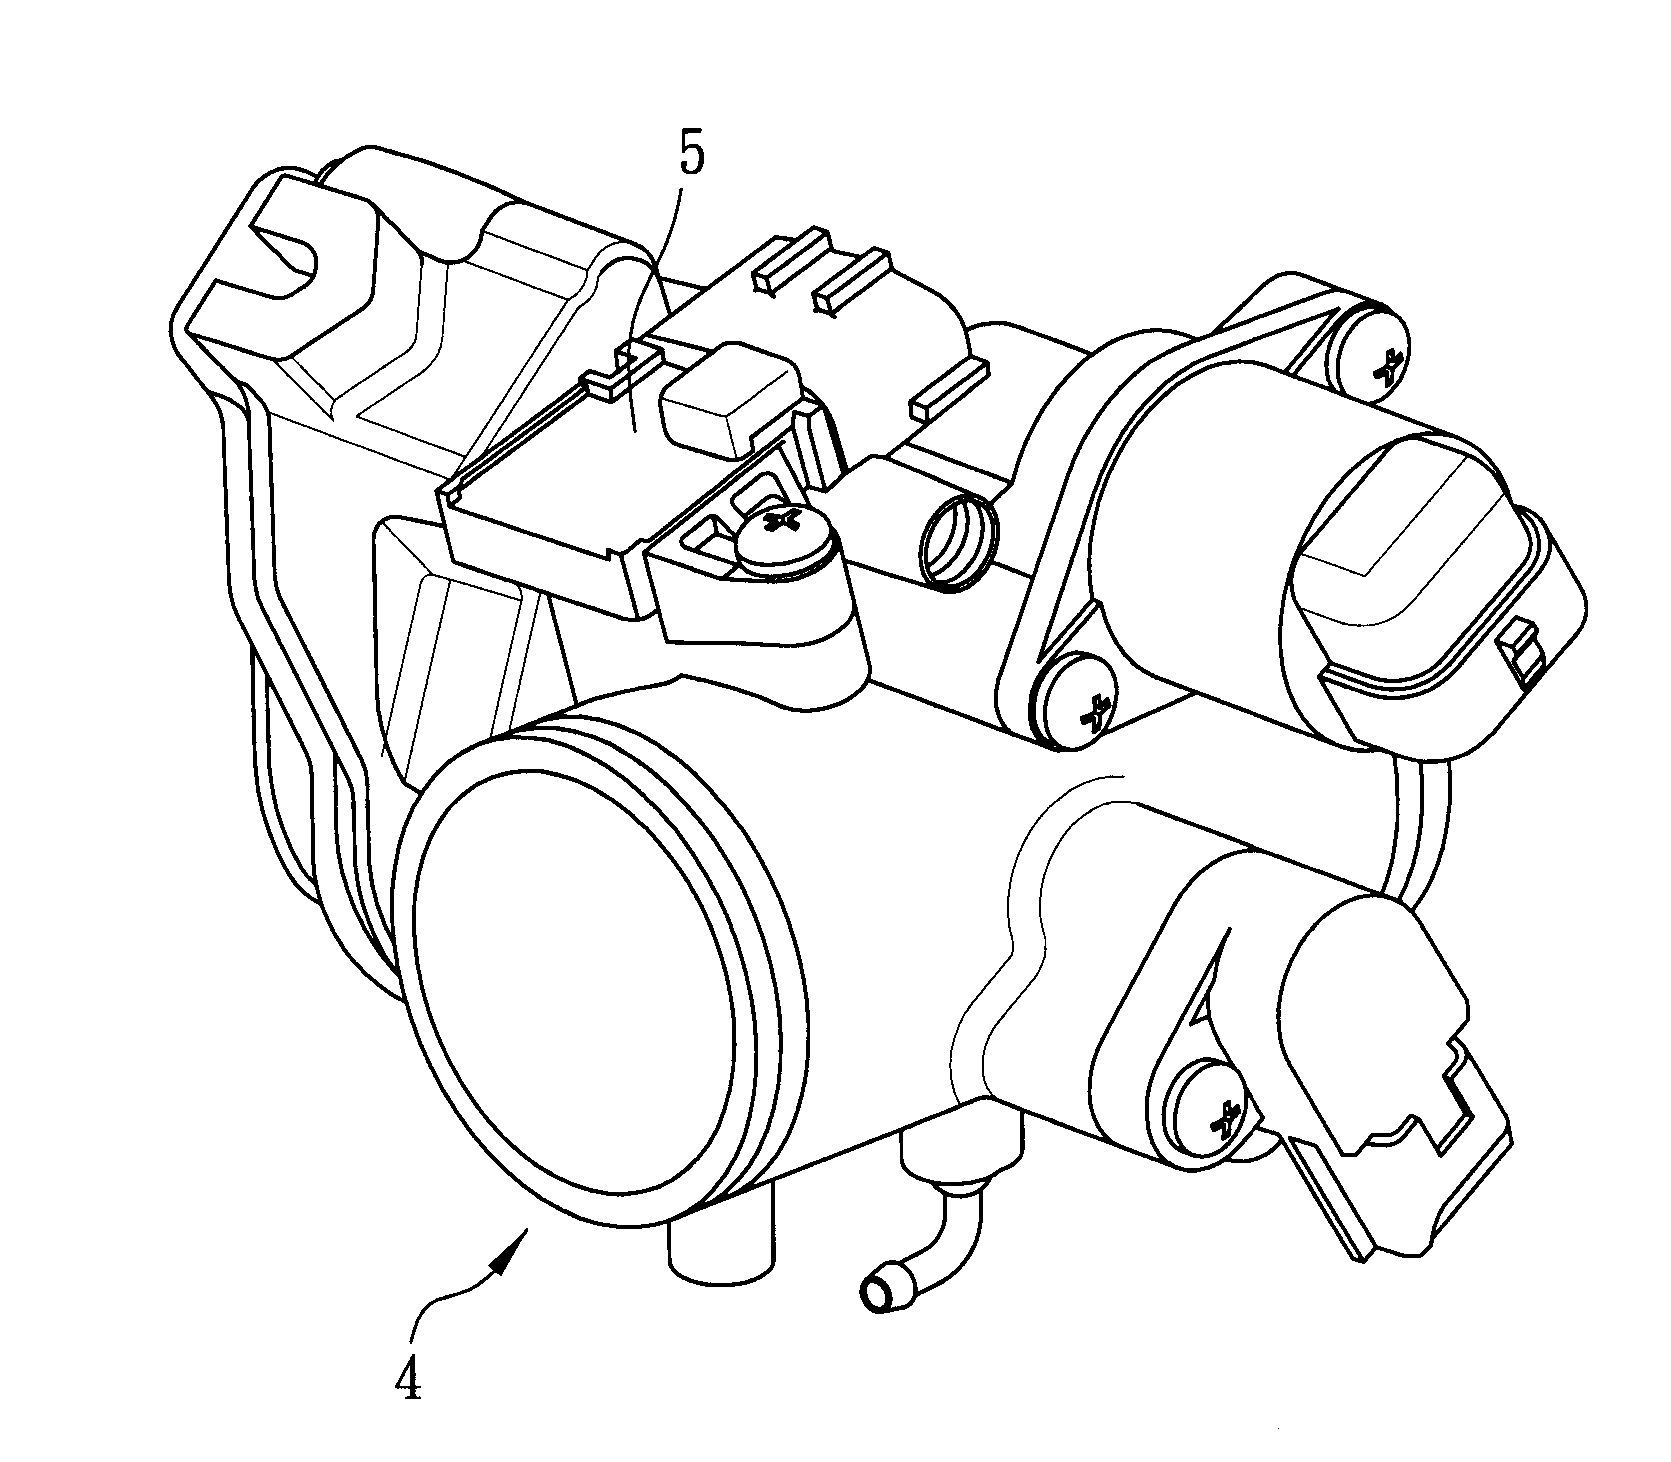 Throttle valve body and throttle valve device having the same